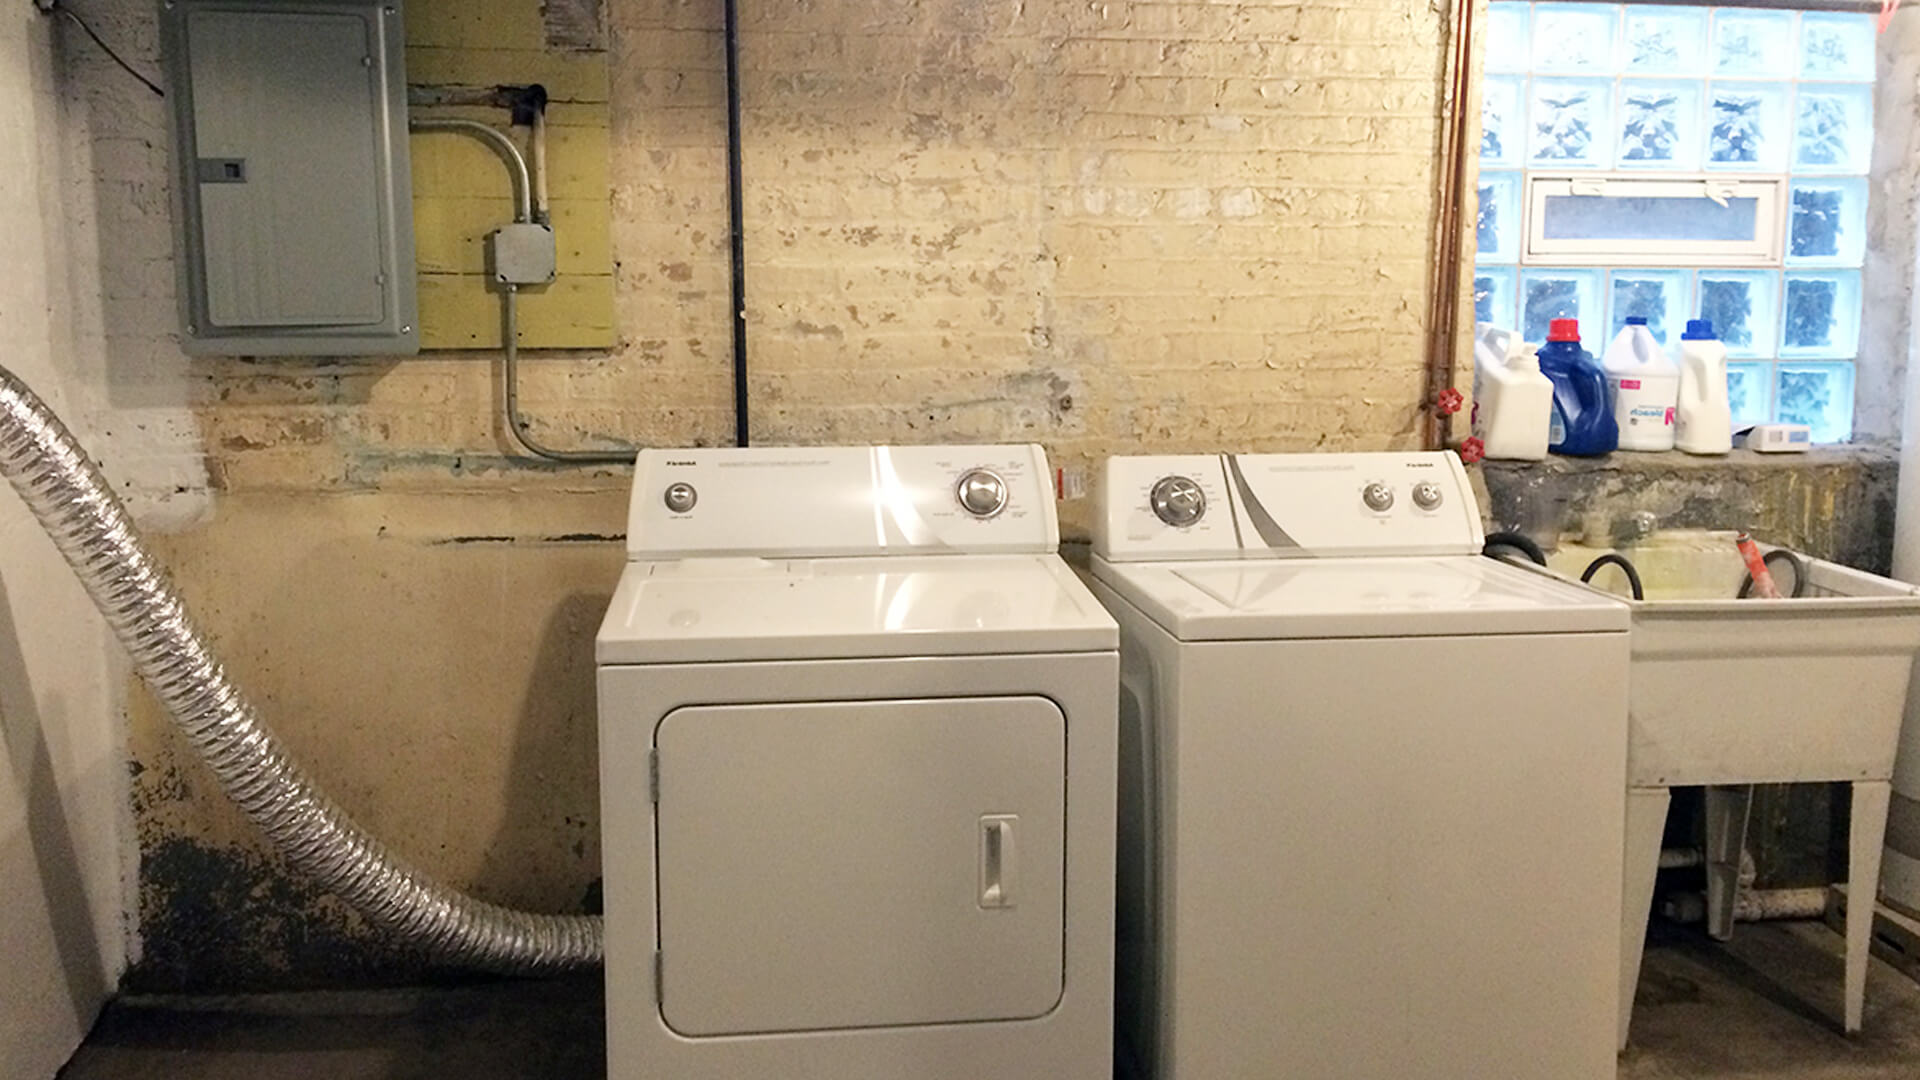 Dryer Vent Cleaning Company Santa Monica |  Six Sense Dryer Vent Cleaning